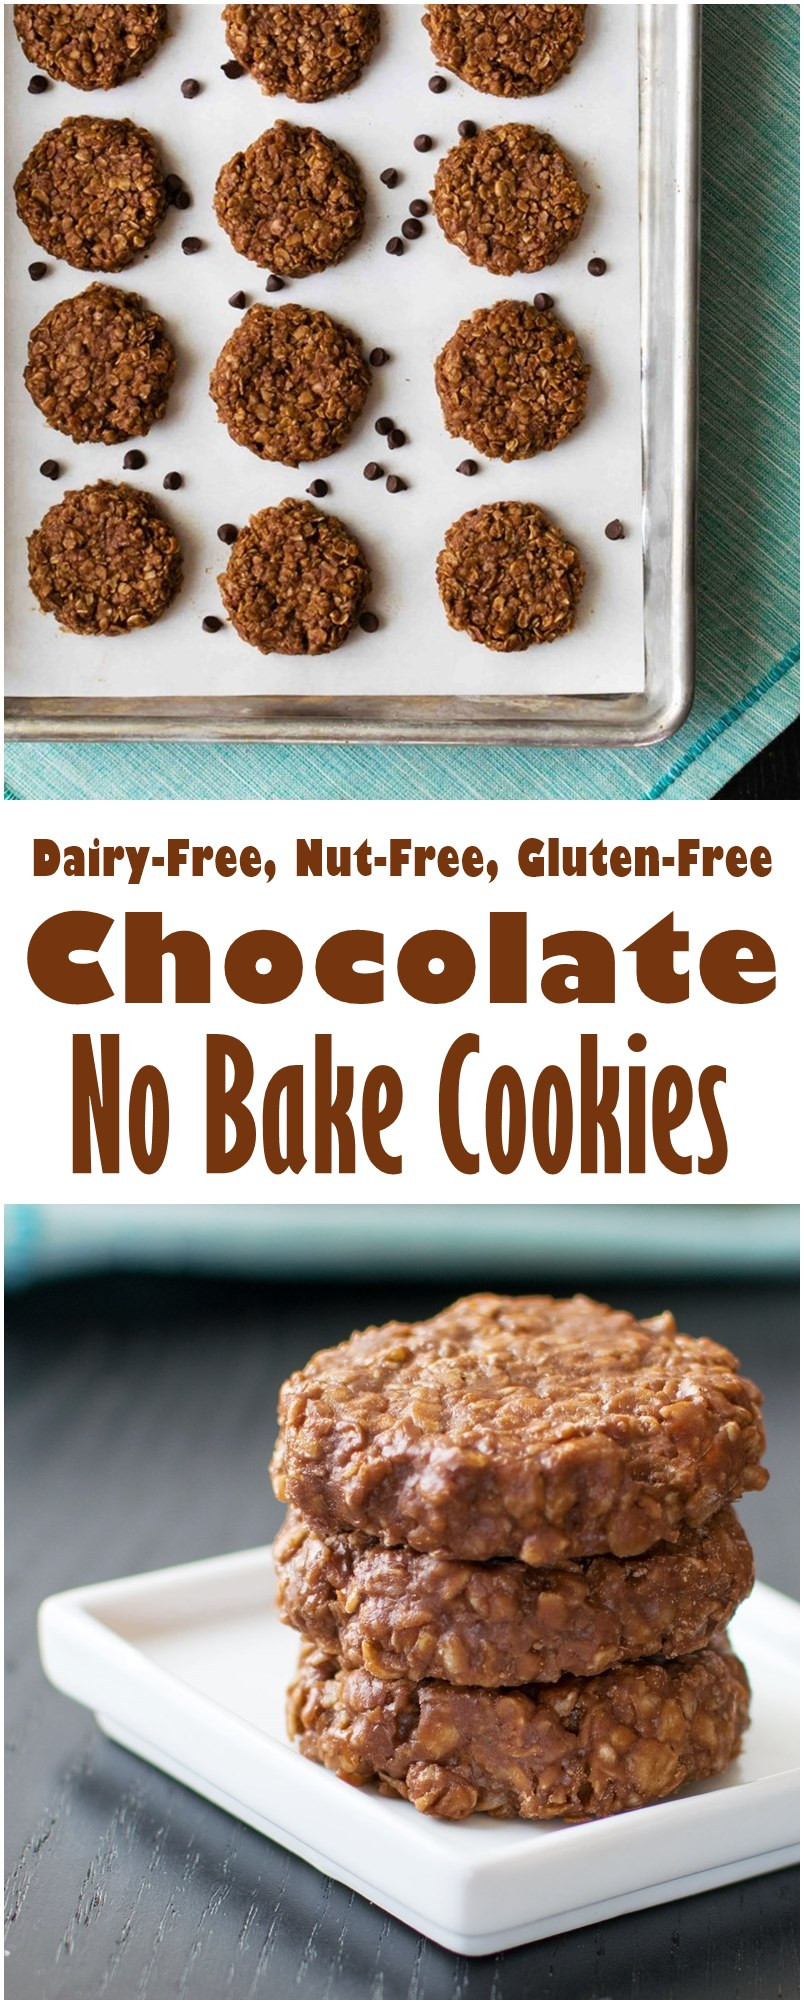 Gluten Free Dairy Free No Bake Cookies
 Chocolate No Bake Cookies Recipe Dairy Free Nut Free